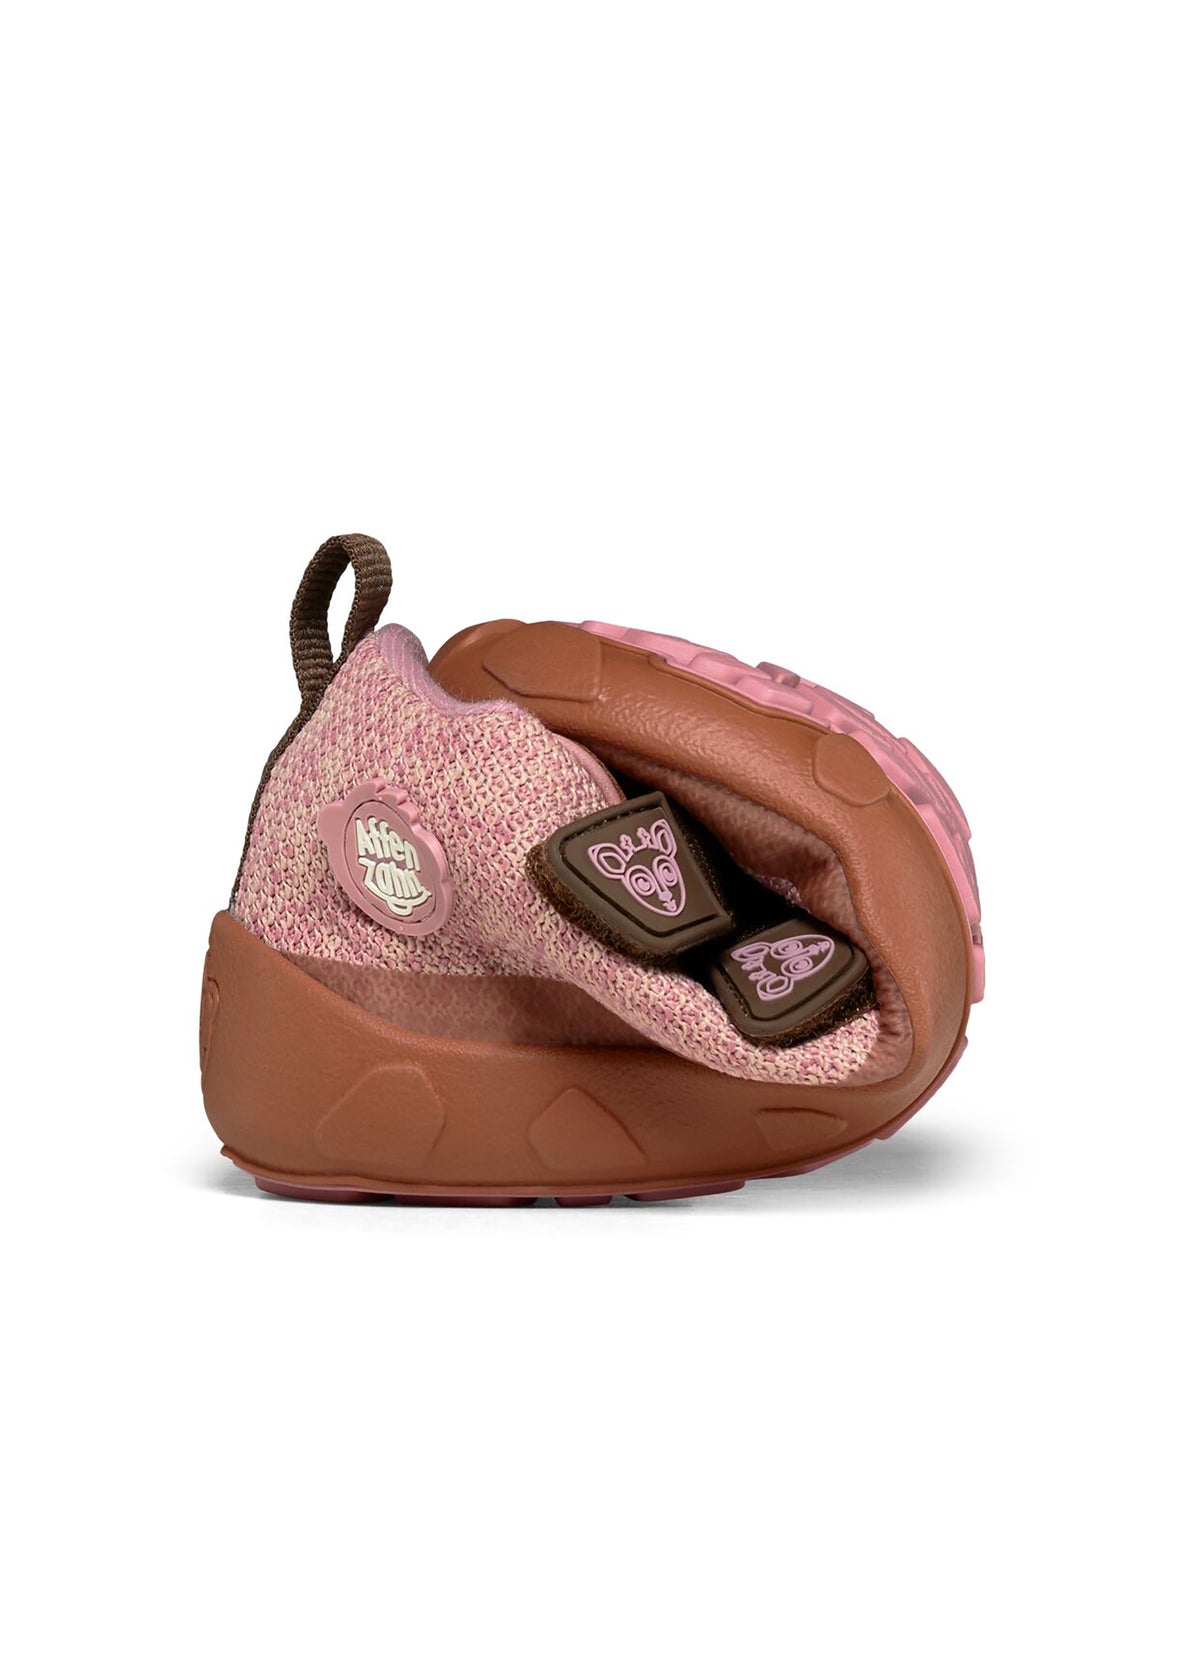 Lasten paljasjalkakengät - Happy Knit Deer, välikausikengät TEX-kalvolla - roosa, ruskea